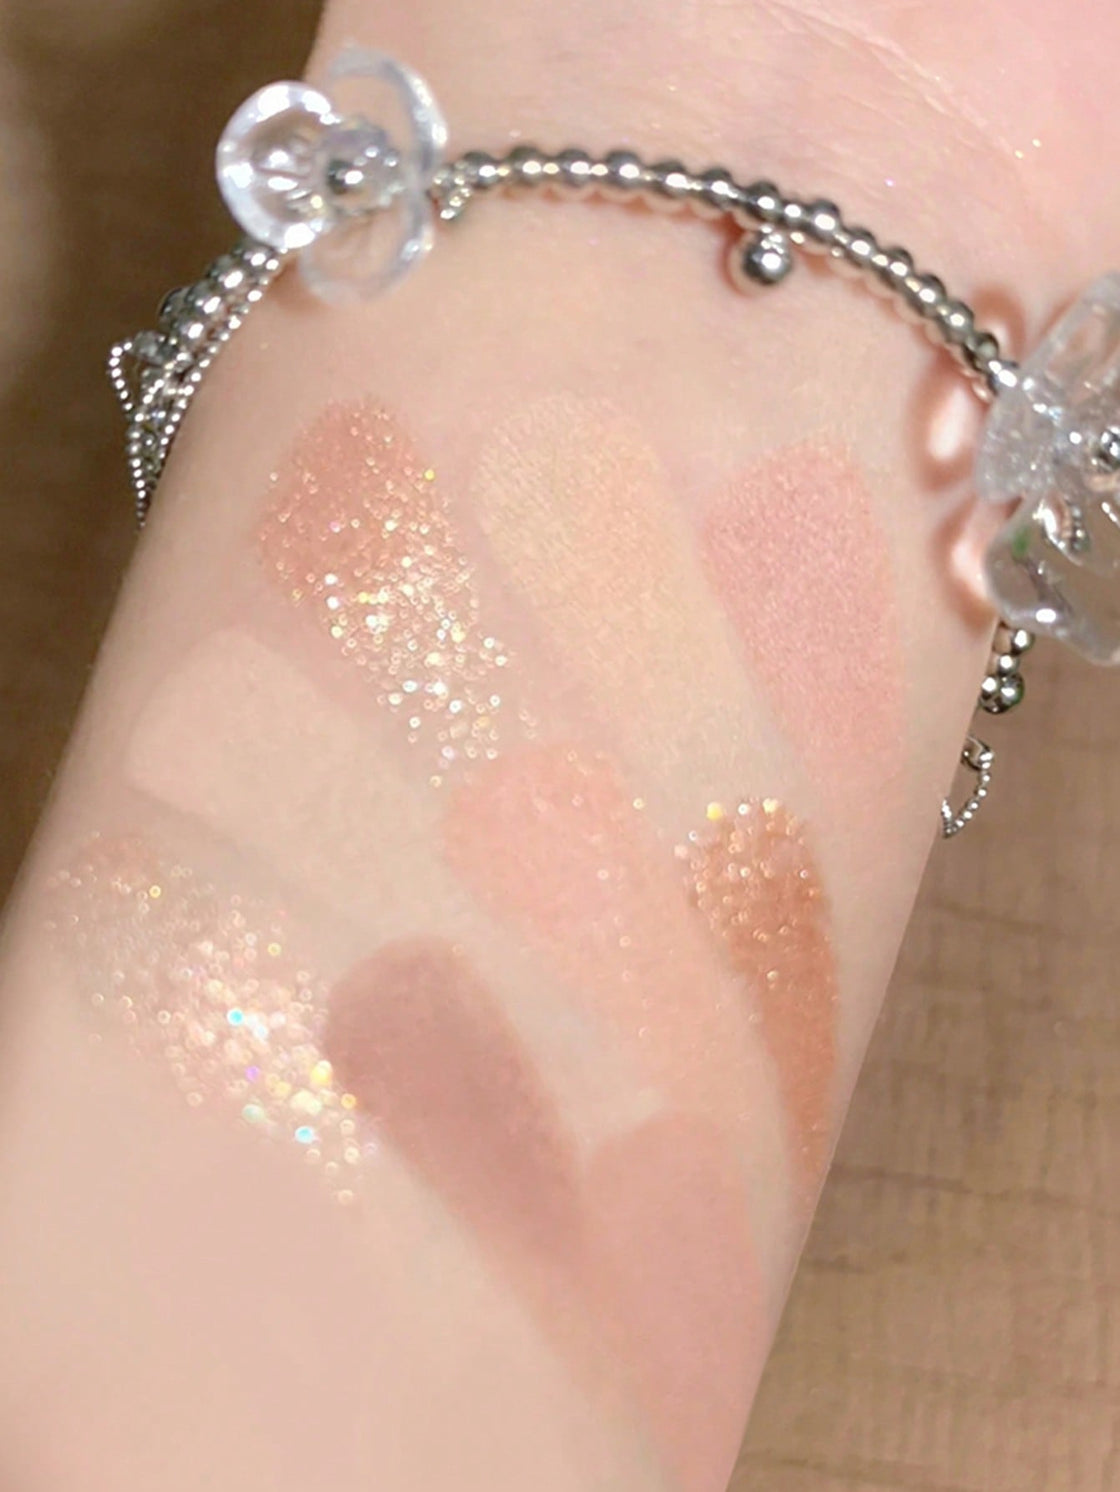 Tati Beauty | Eyeshadow Palette | Gold